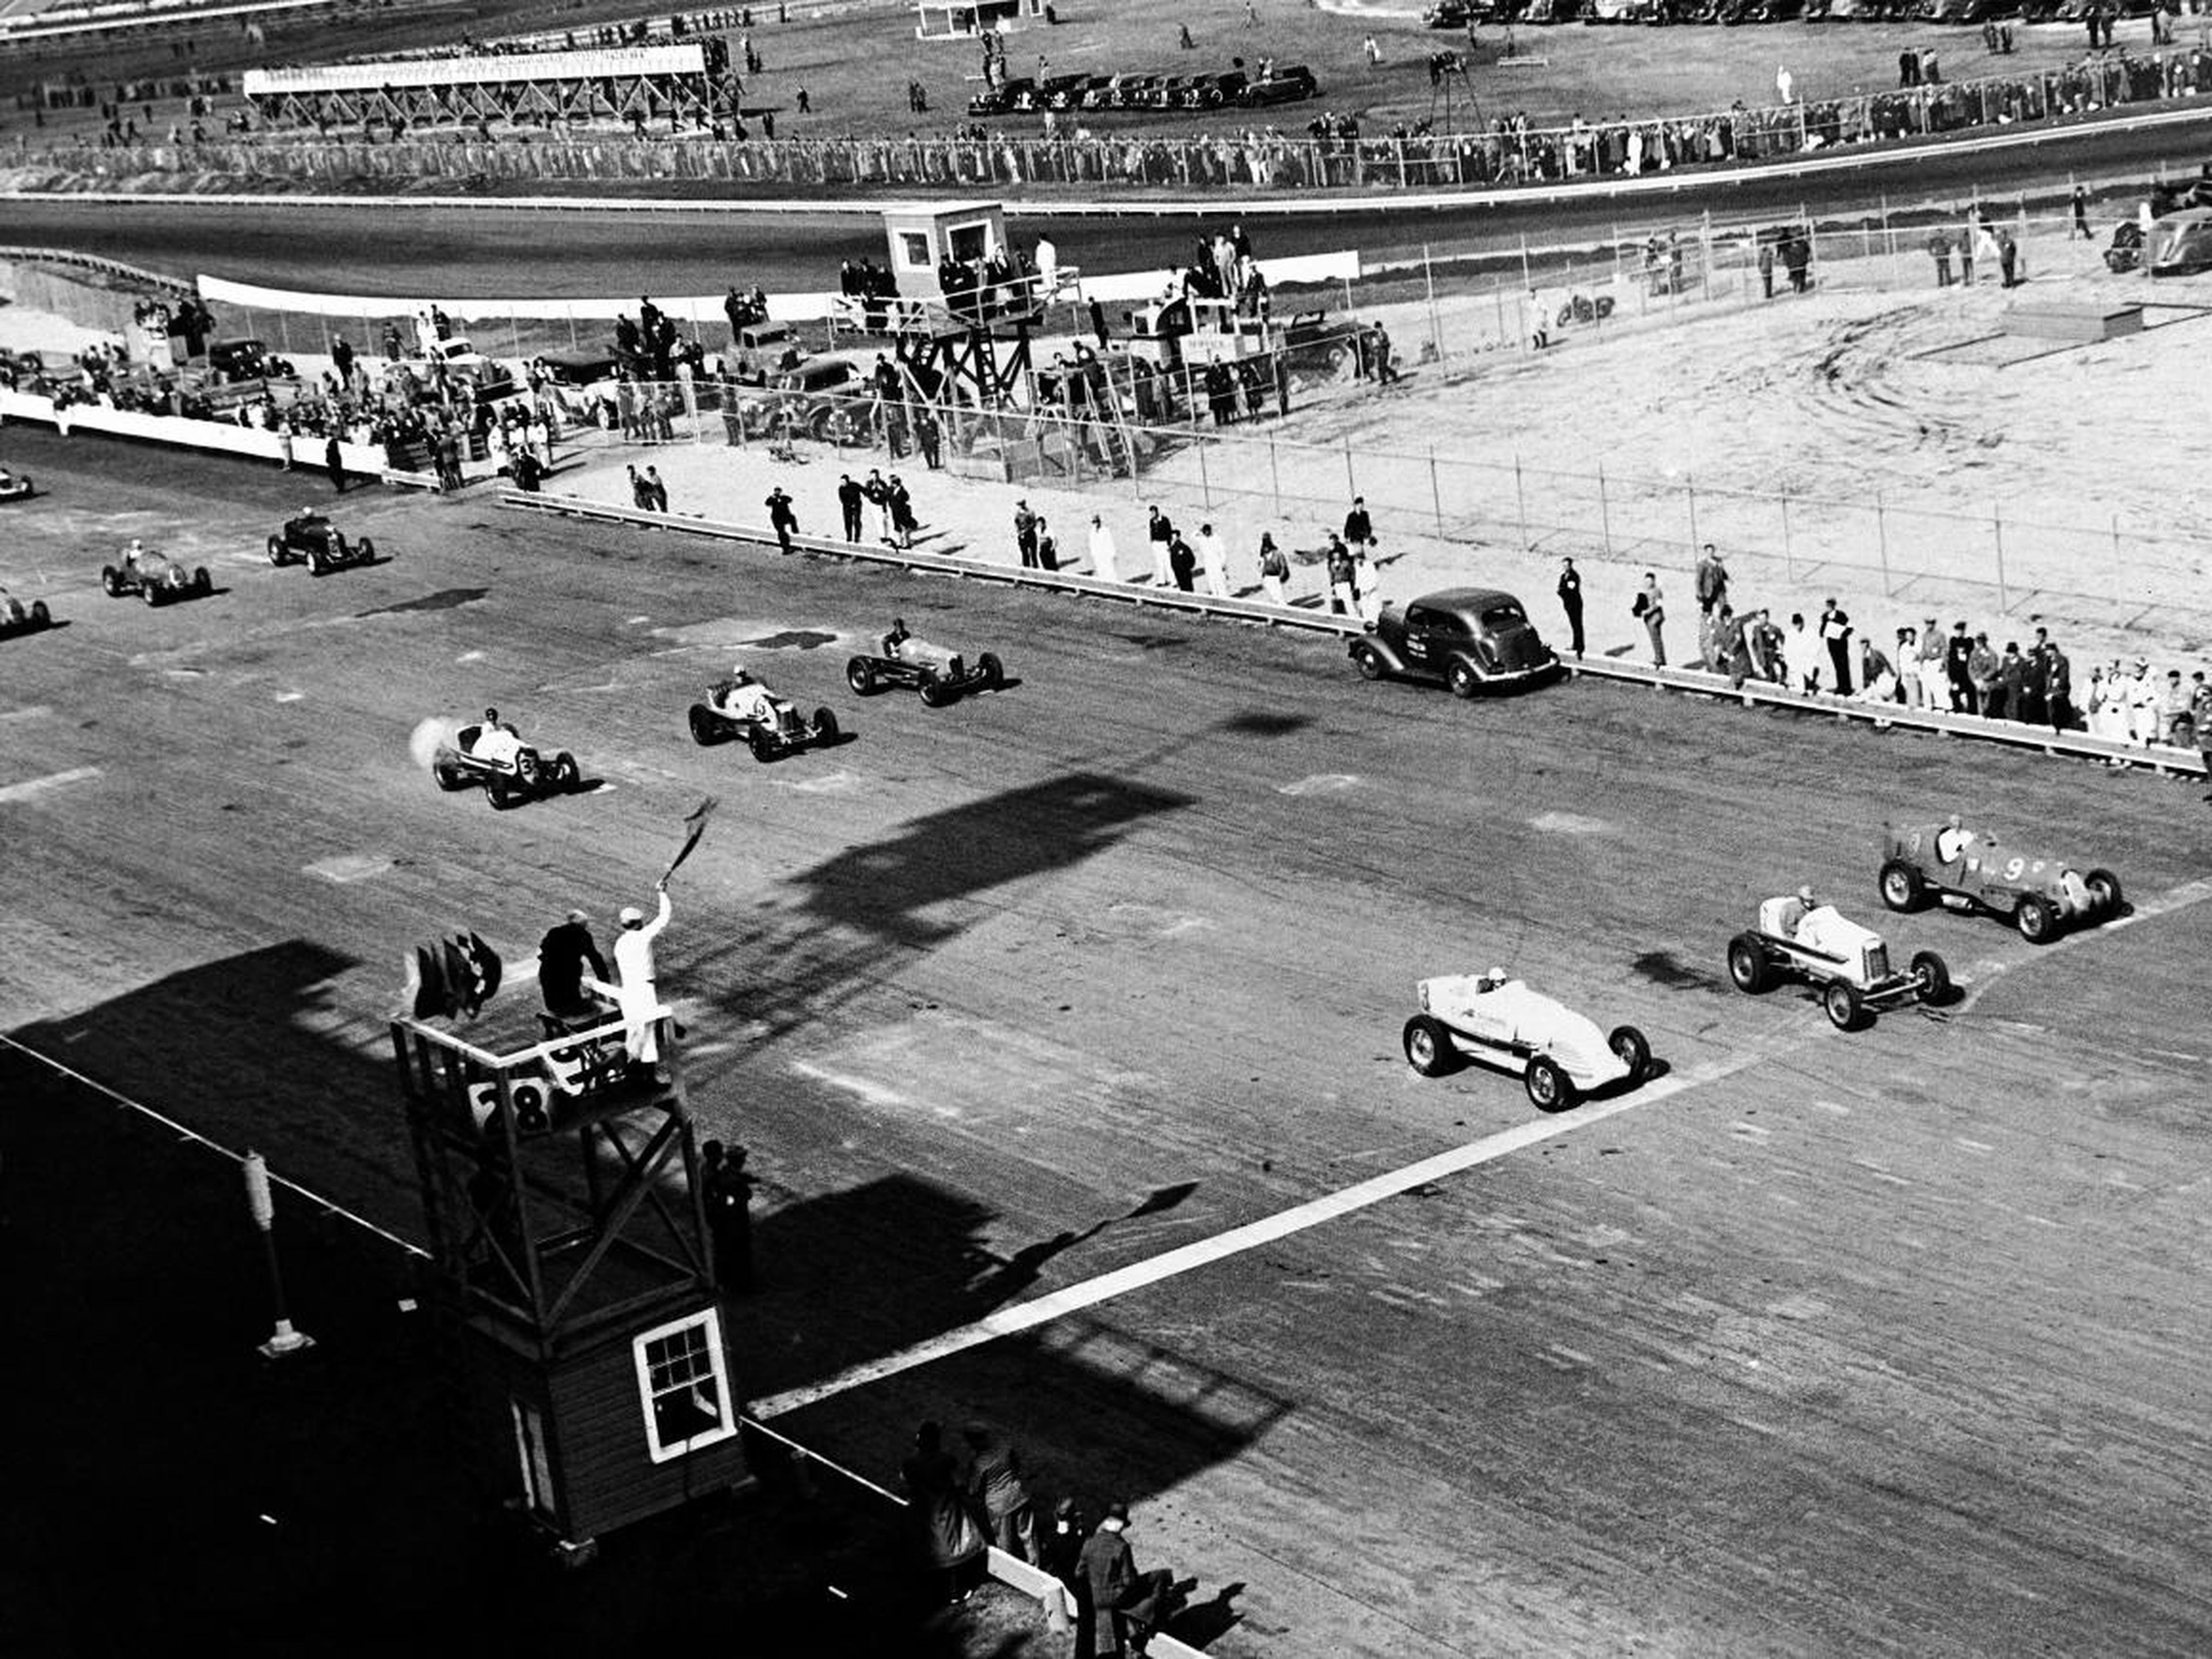 The team raced mostly Alfa Romeo cars. By 1933, Scuderia Ferrari had essentially become Alfa's racing division.